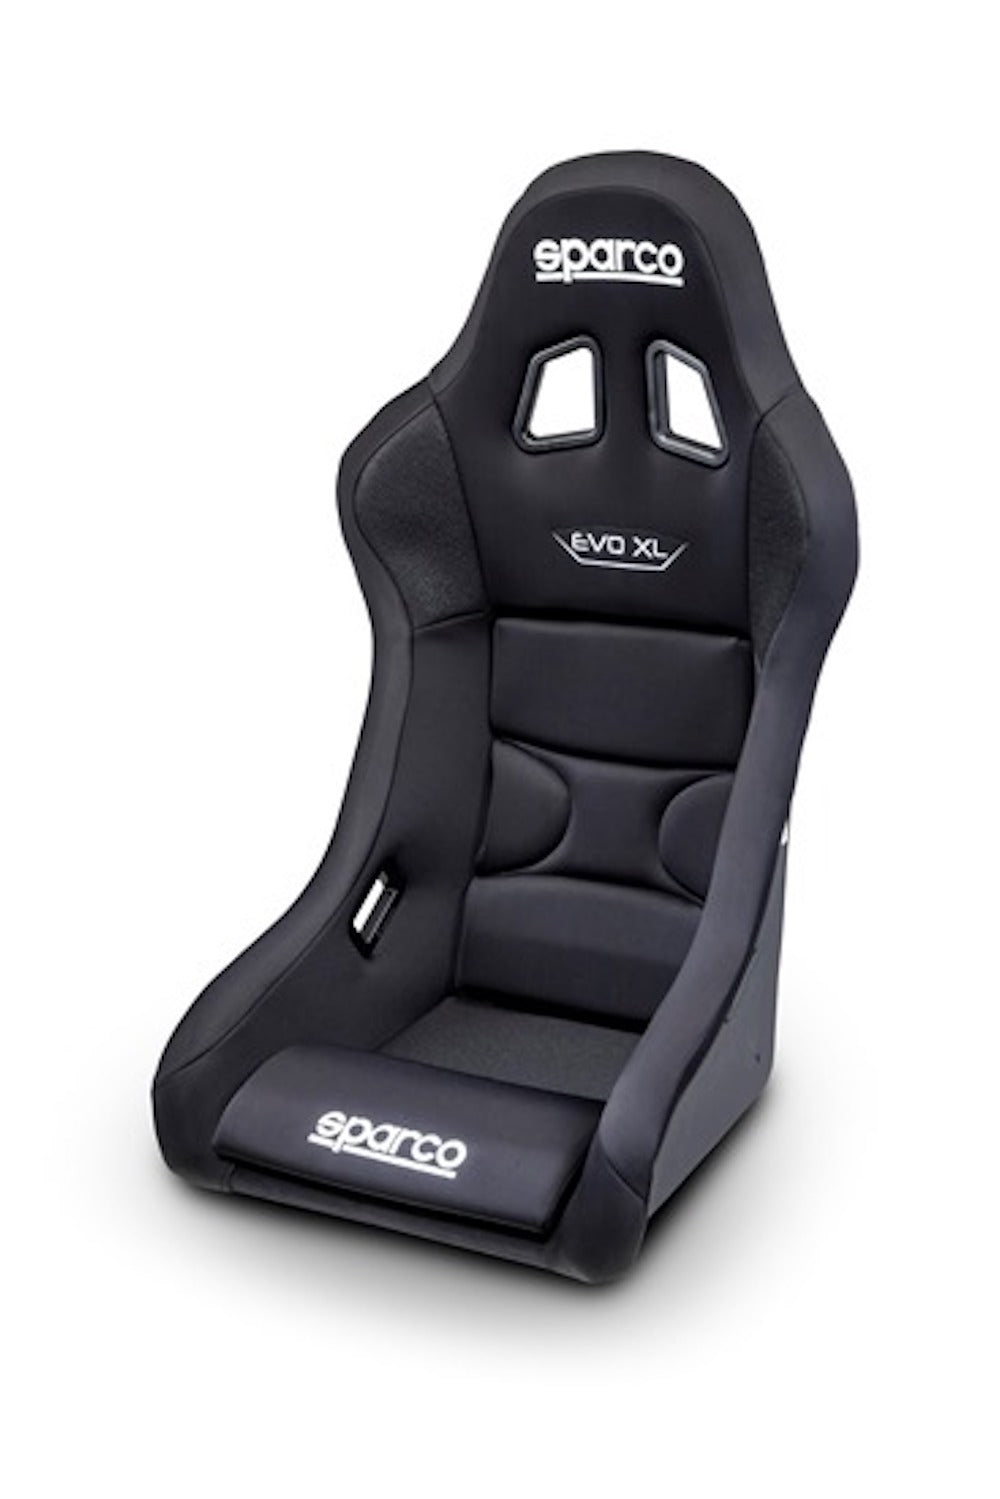 Sparco EVO XL QRT-X Racing Seats 2028